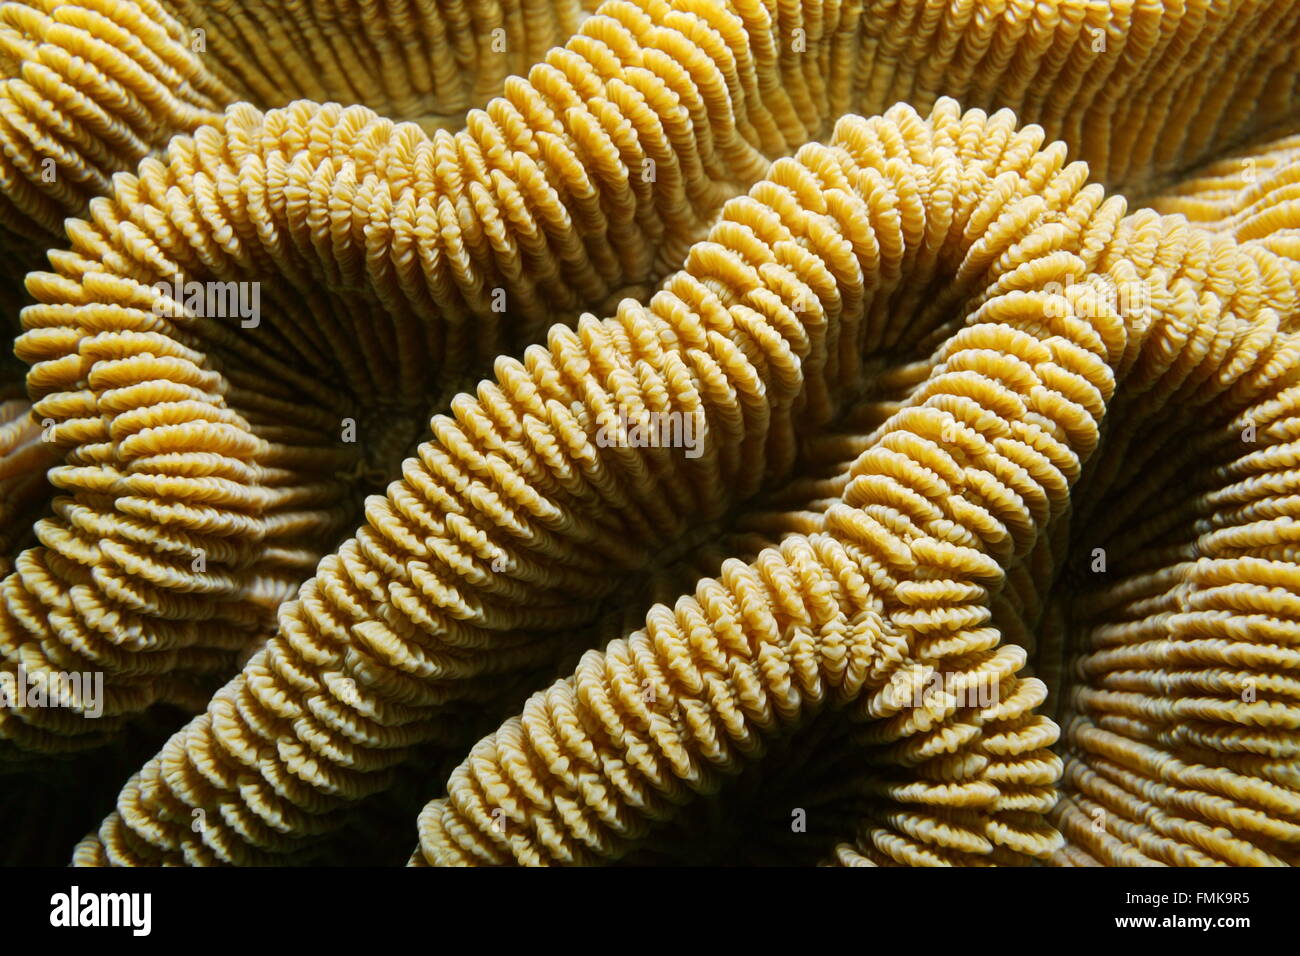 Sea life, ridges of boulder brain coral, Colpophyllia natans, close-up, Caribbean sea Stock Photo